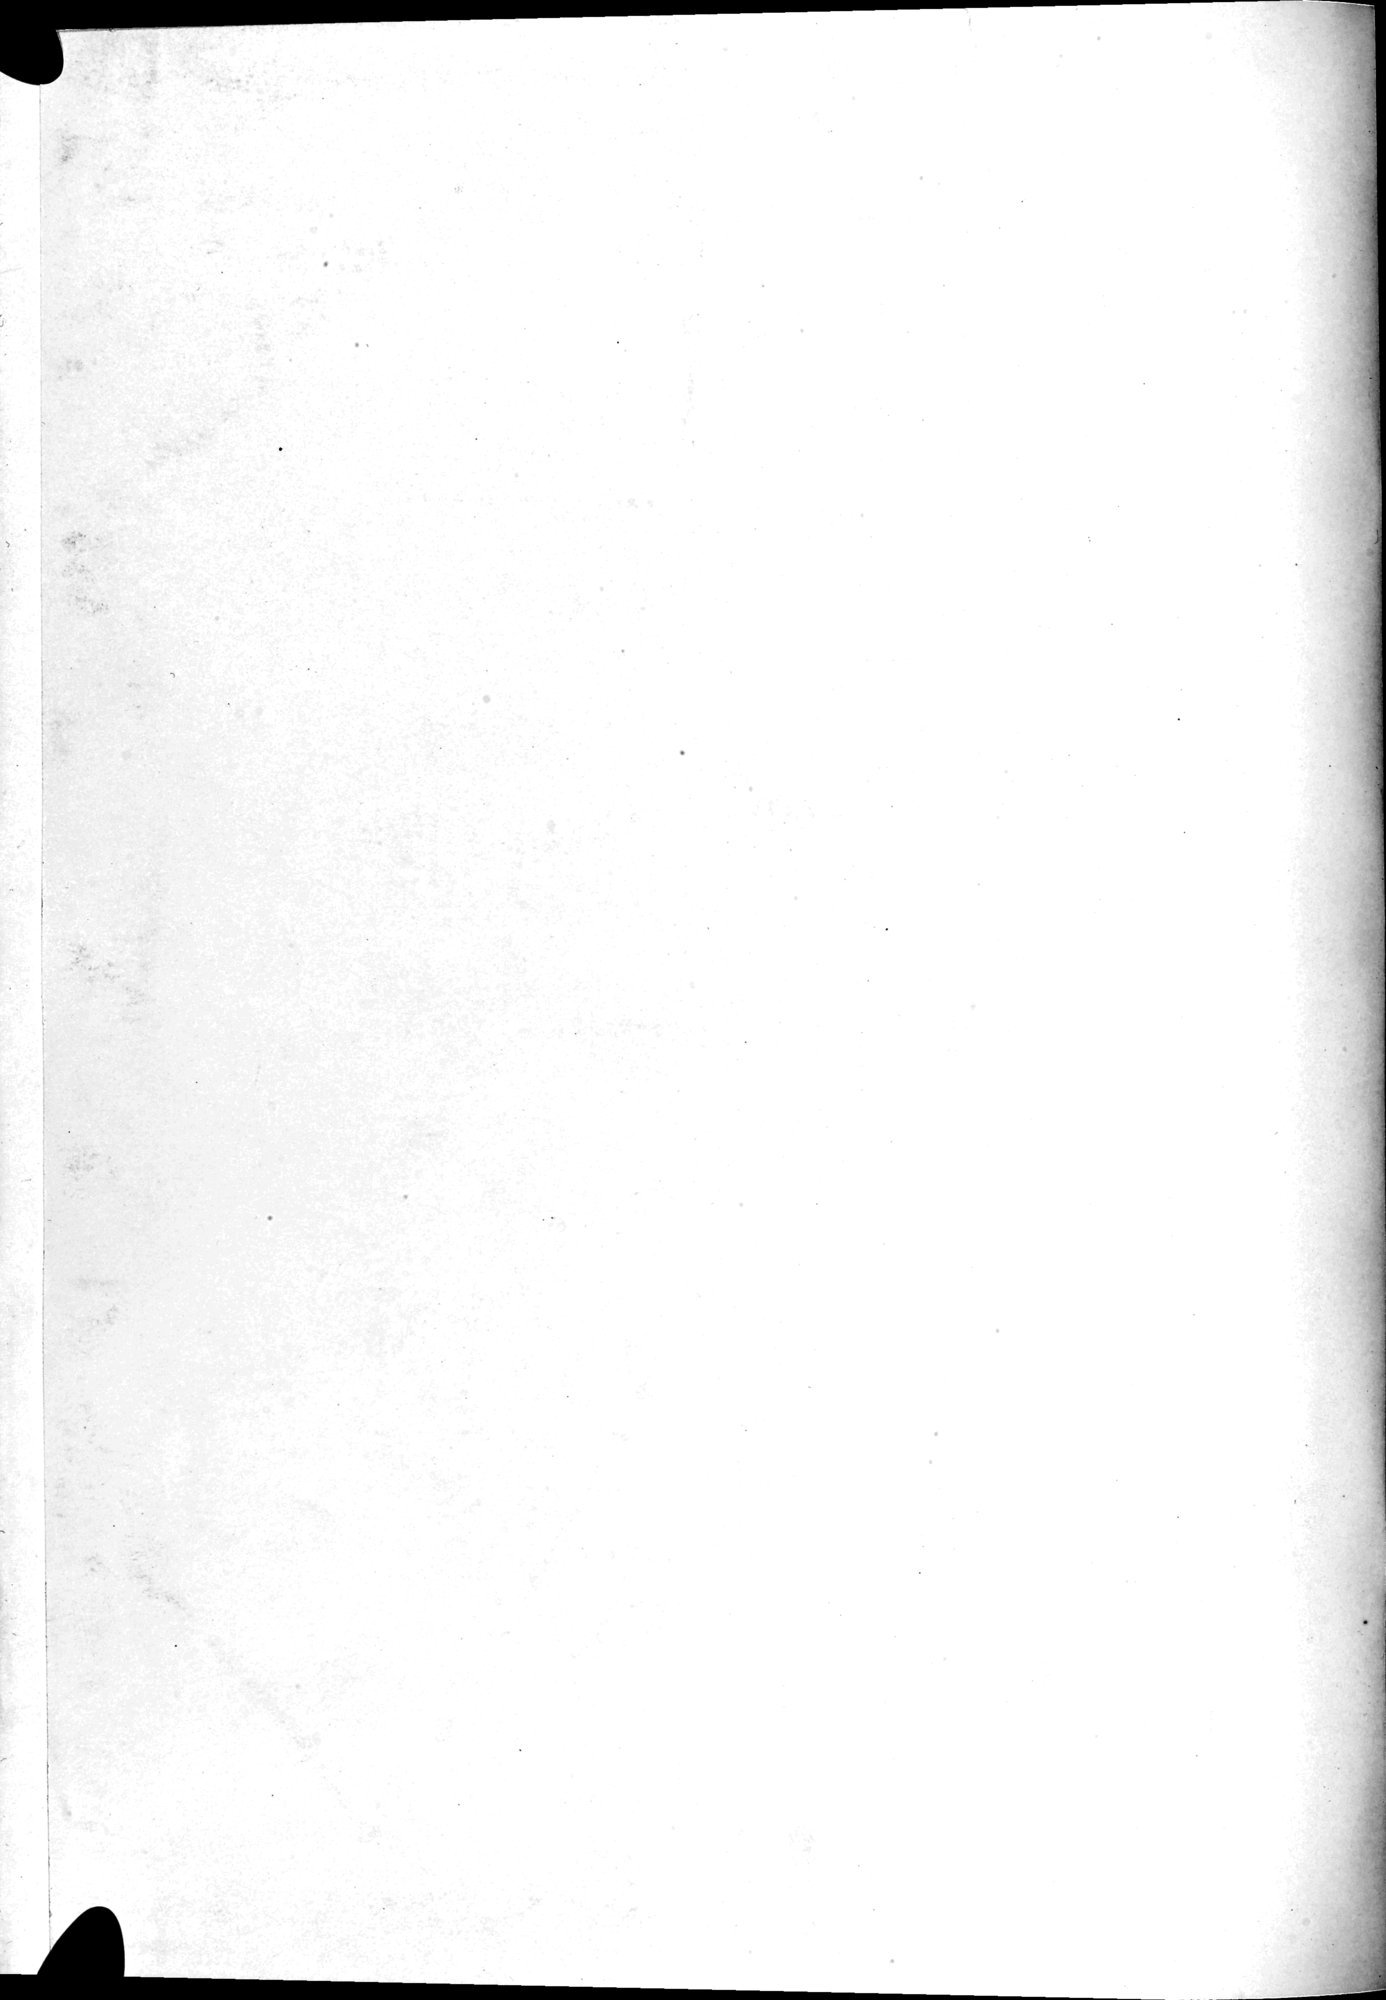 Ot Kiakhty na Istoki Zheltoi Rieki : vol.1 / Page 4 (Grayscale High Resolution Image)